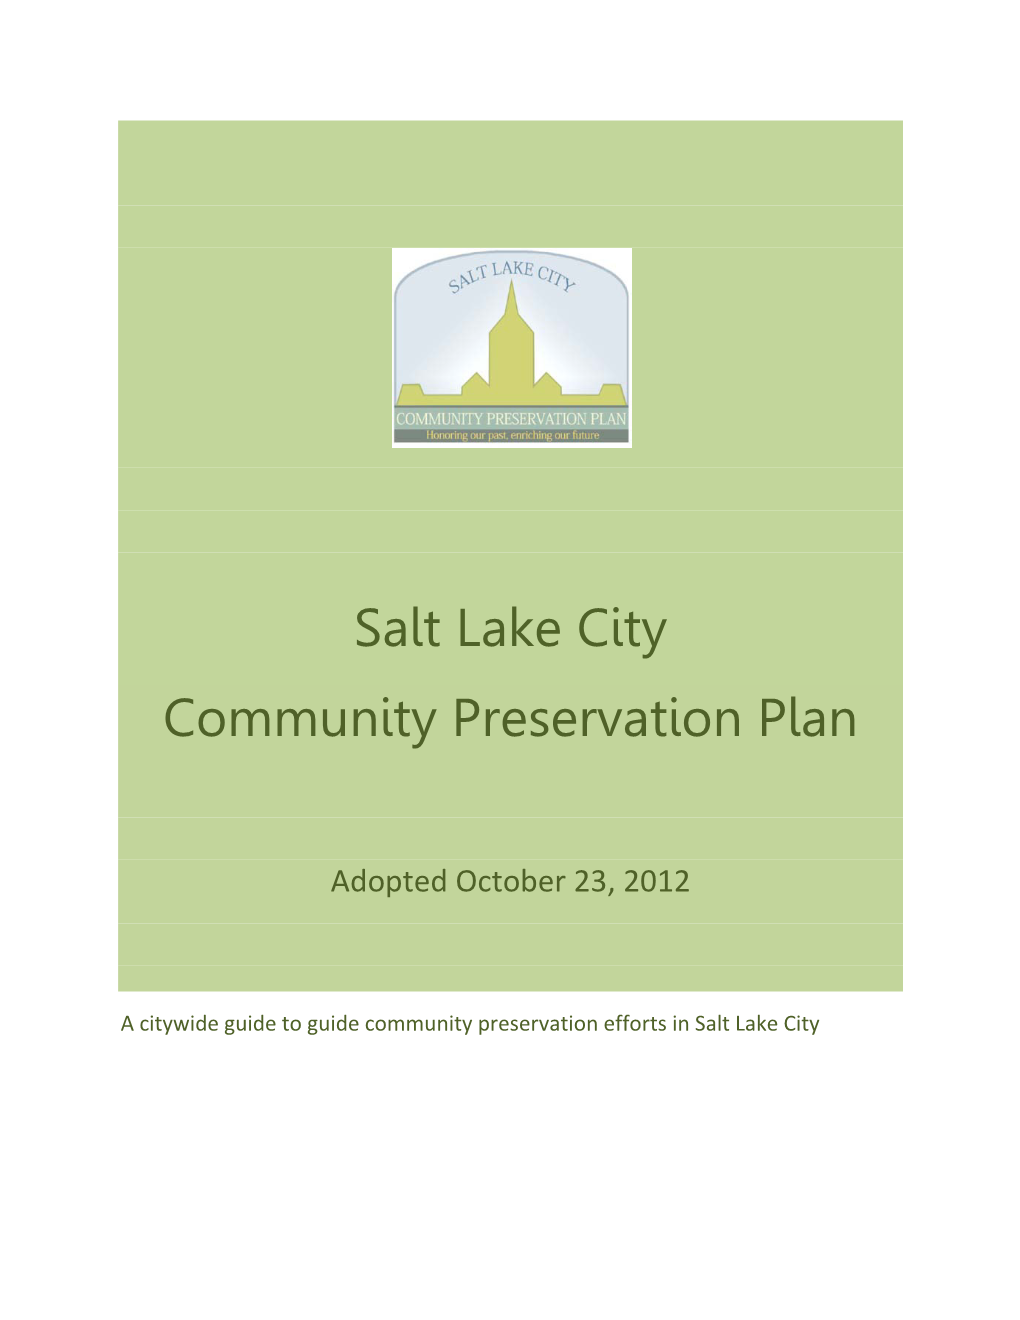 Salt Lake City Community Preservation Plan